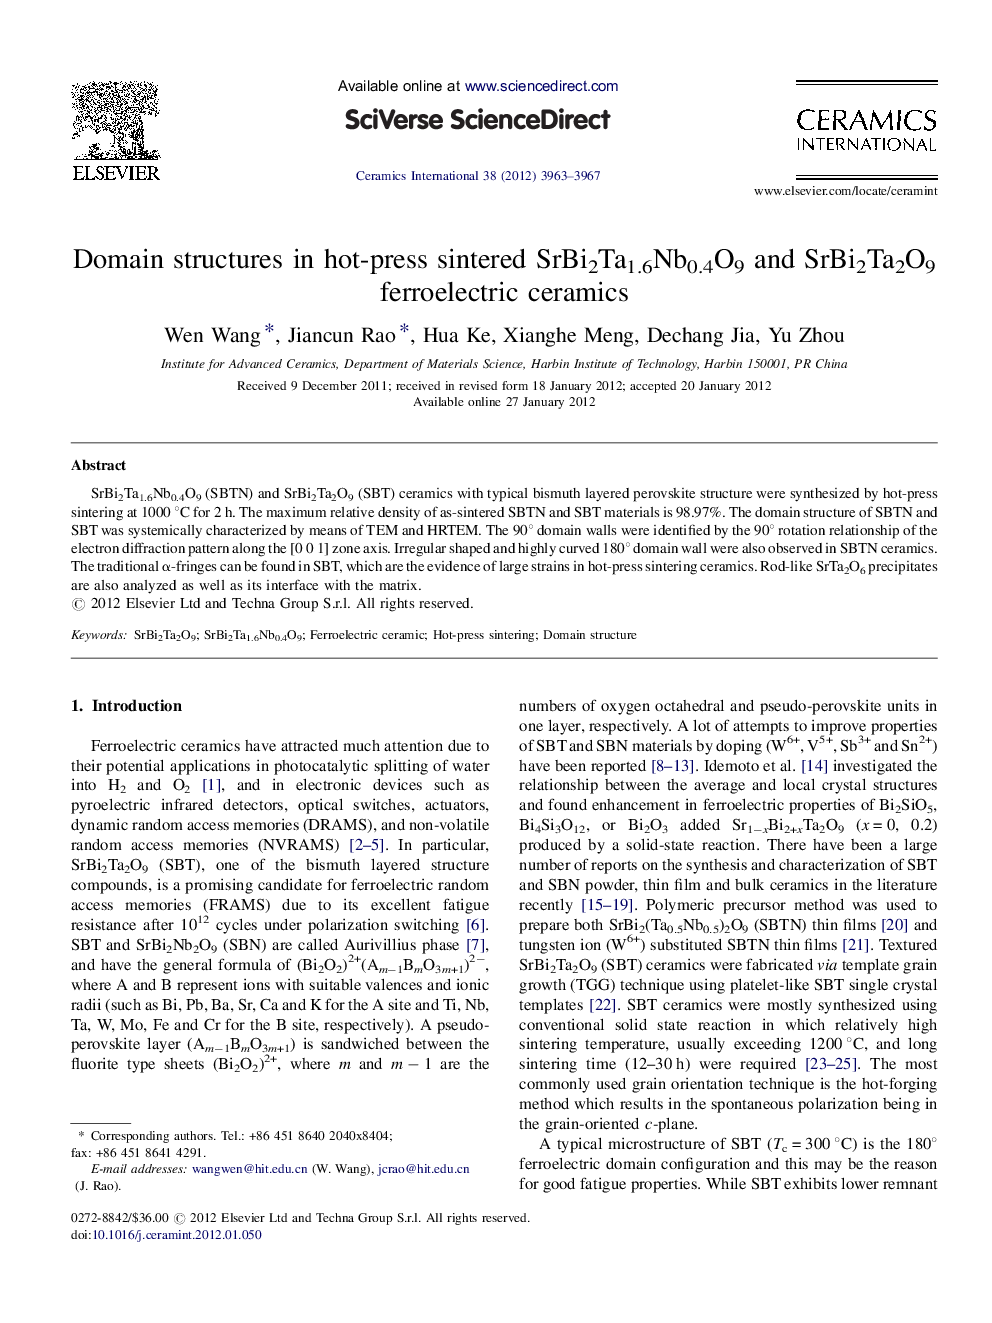 Domain structures in hot-press sintered SrBi2Ta1.6Nb0.4O9 and SrBi2Ta2O9 ferroelectric ceramics